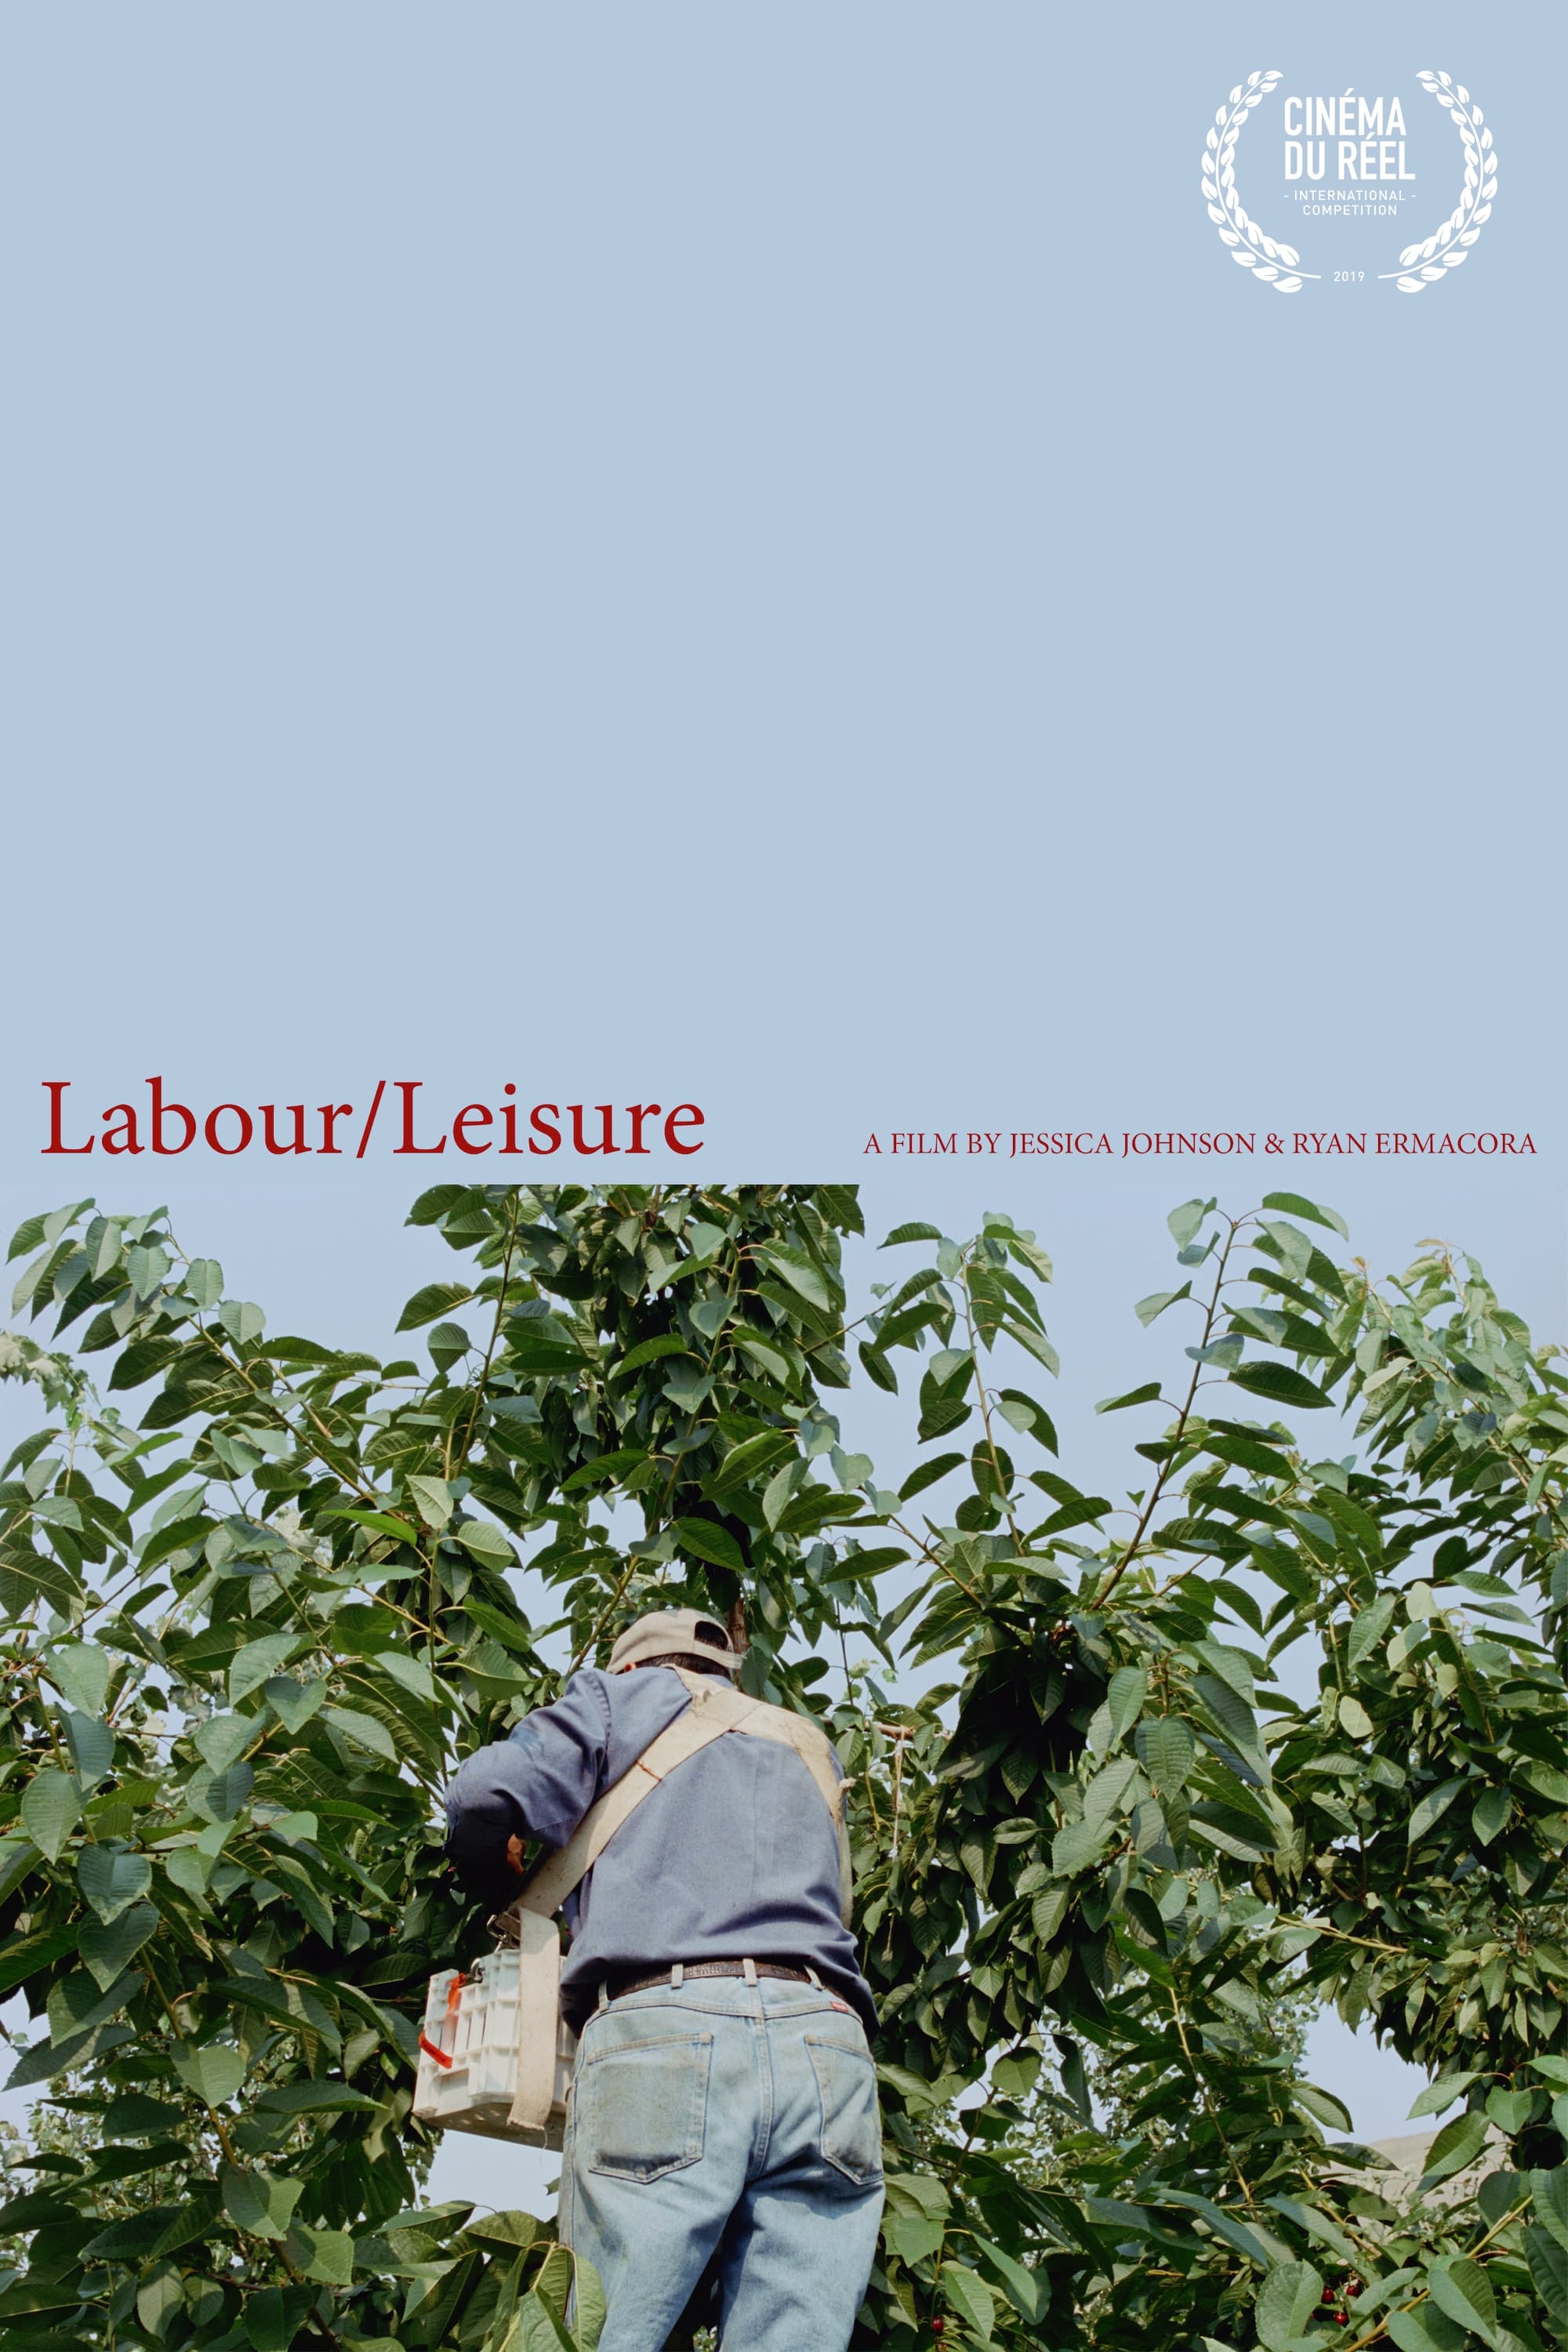 Labour/Leisure